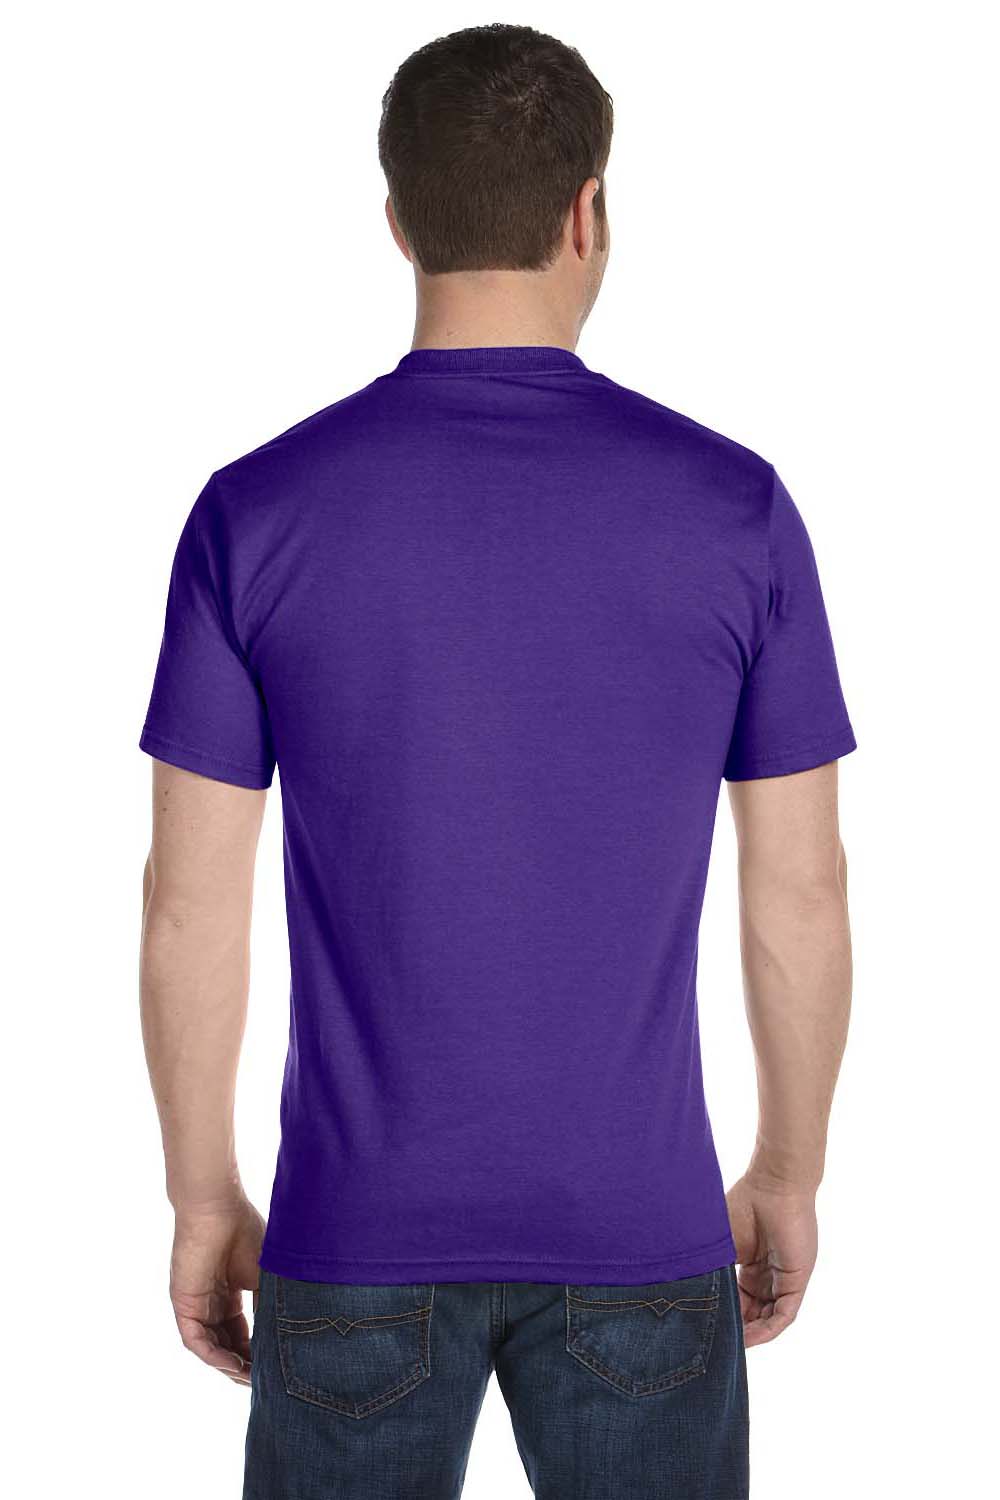 Hanes 5180 Mens Beefy-T Short Sleeve Crewneck T-Shirt Purple Back